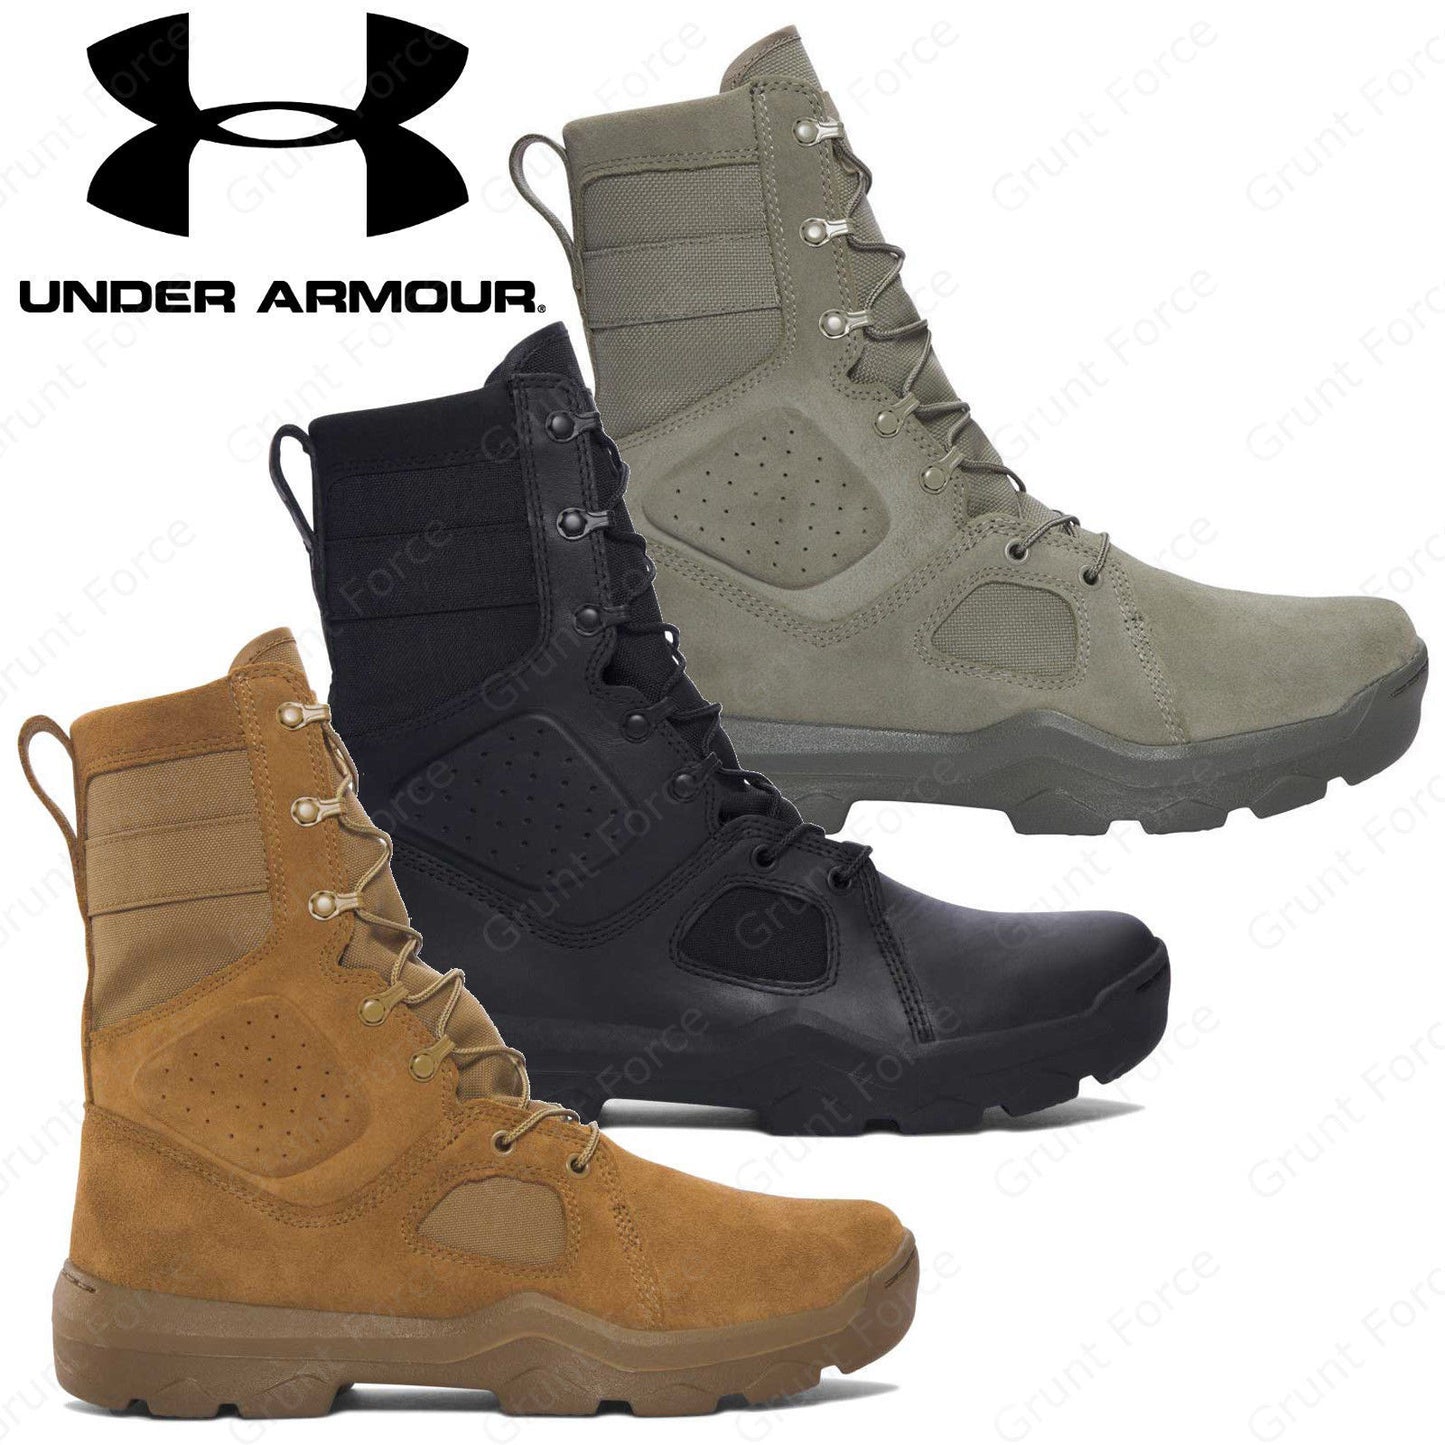 Under Armour Men's Tactical Boots - UA FNP Style 1287352